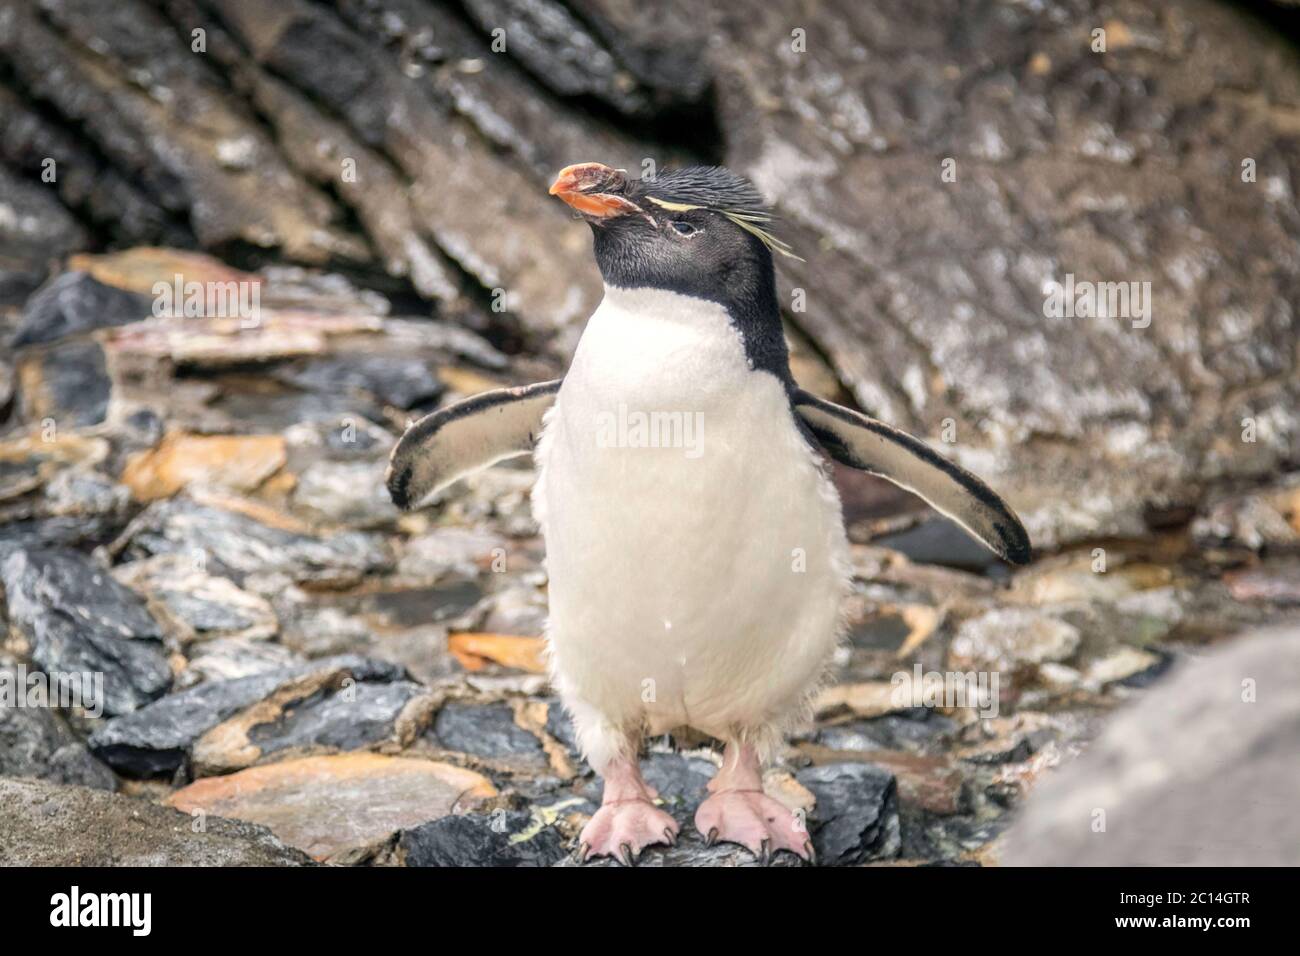 Rockhopper penguin posing for a portrait. Stock Photo